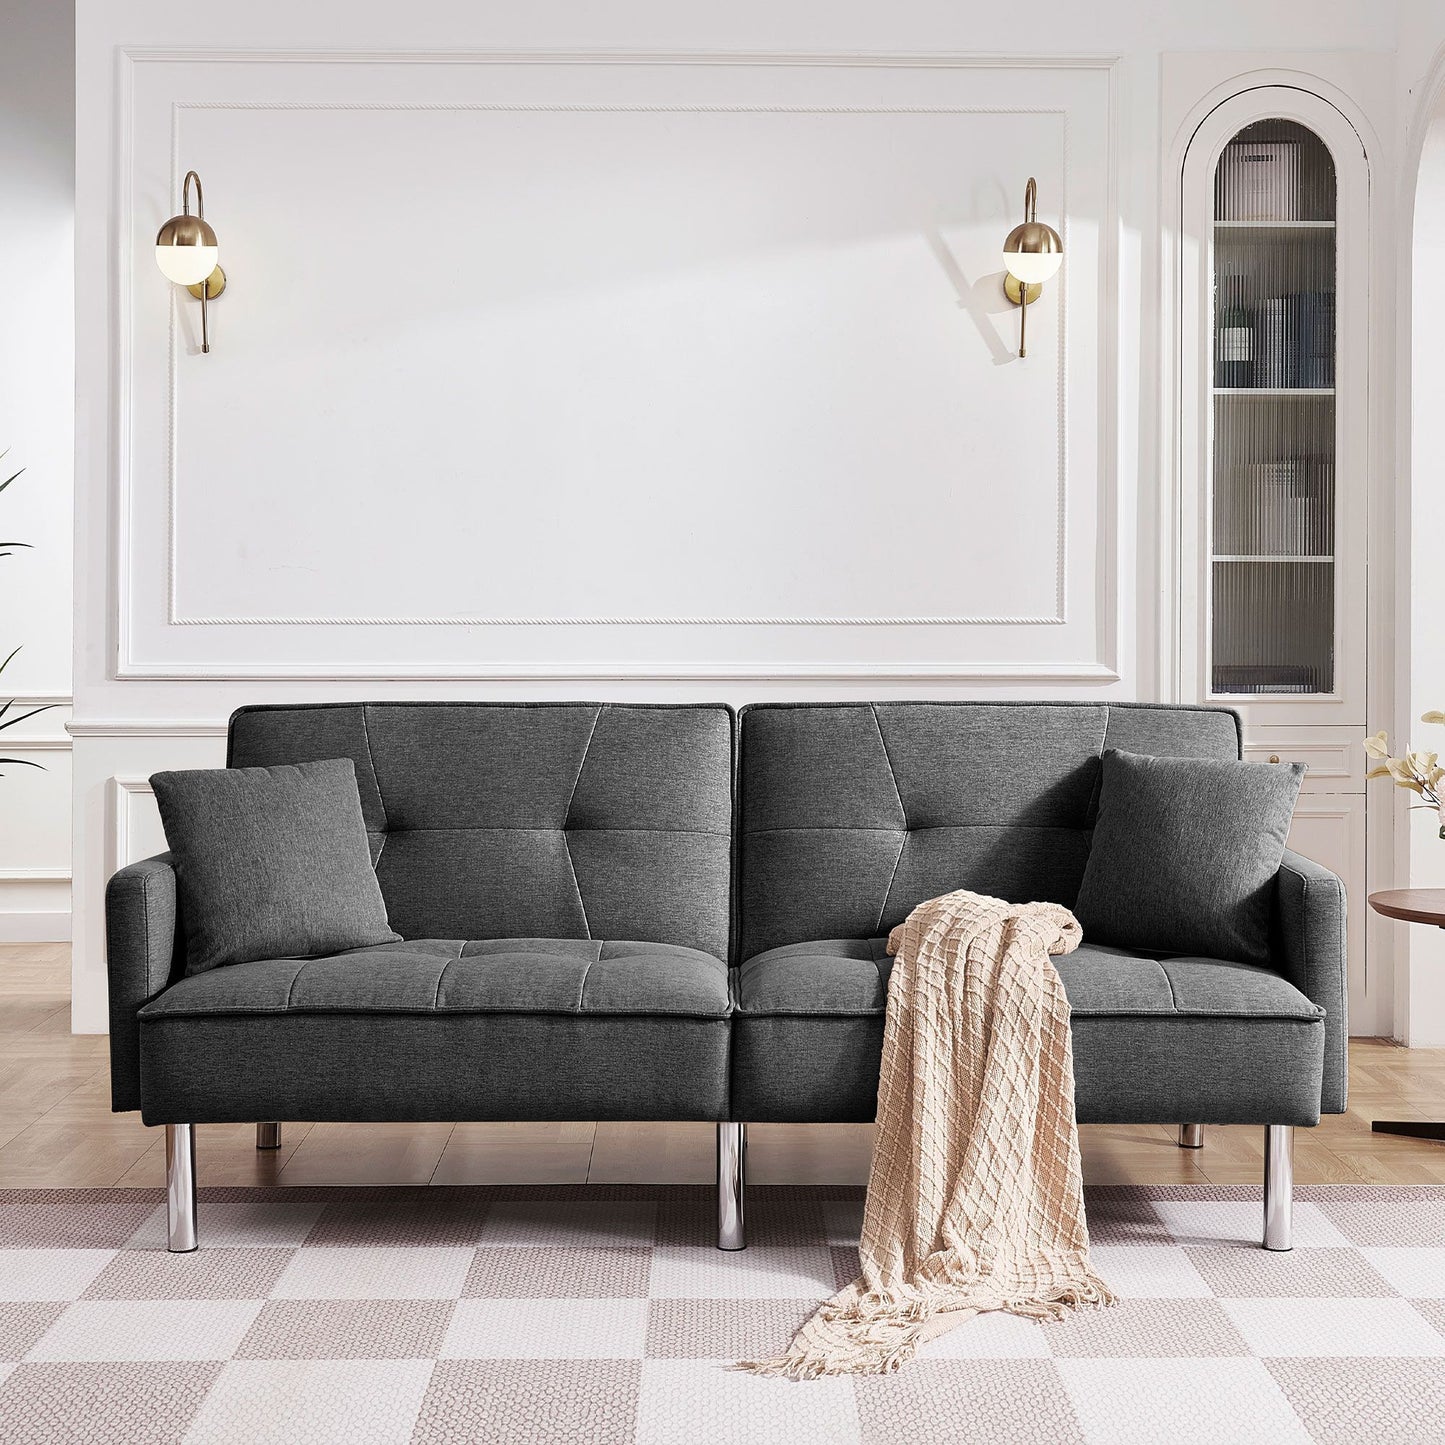 85" Dark Gray Polyester Blend Convertible Futon Sleeper Sofa And Toss Pillows With Silver Legs